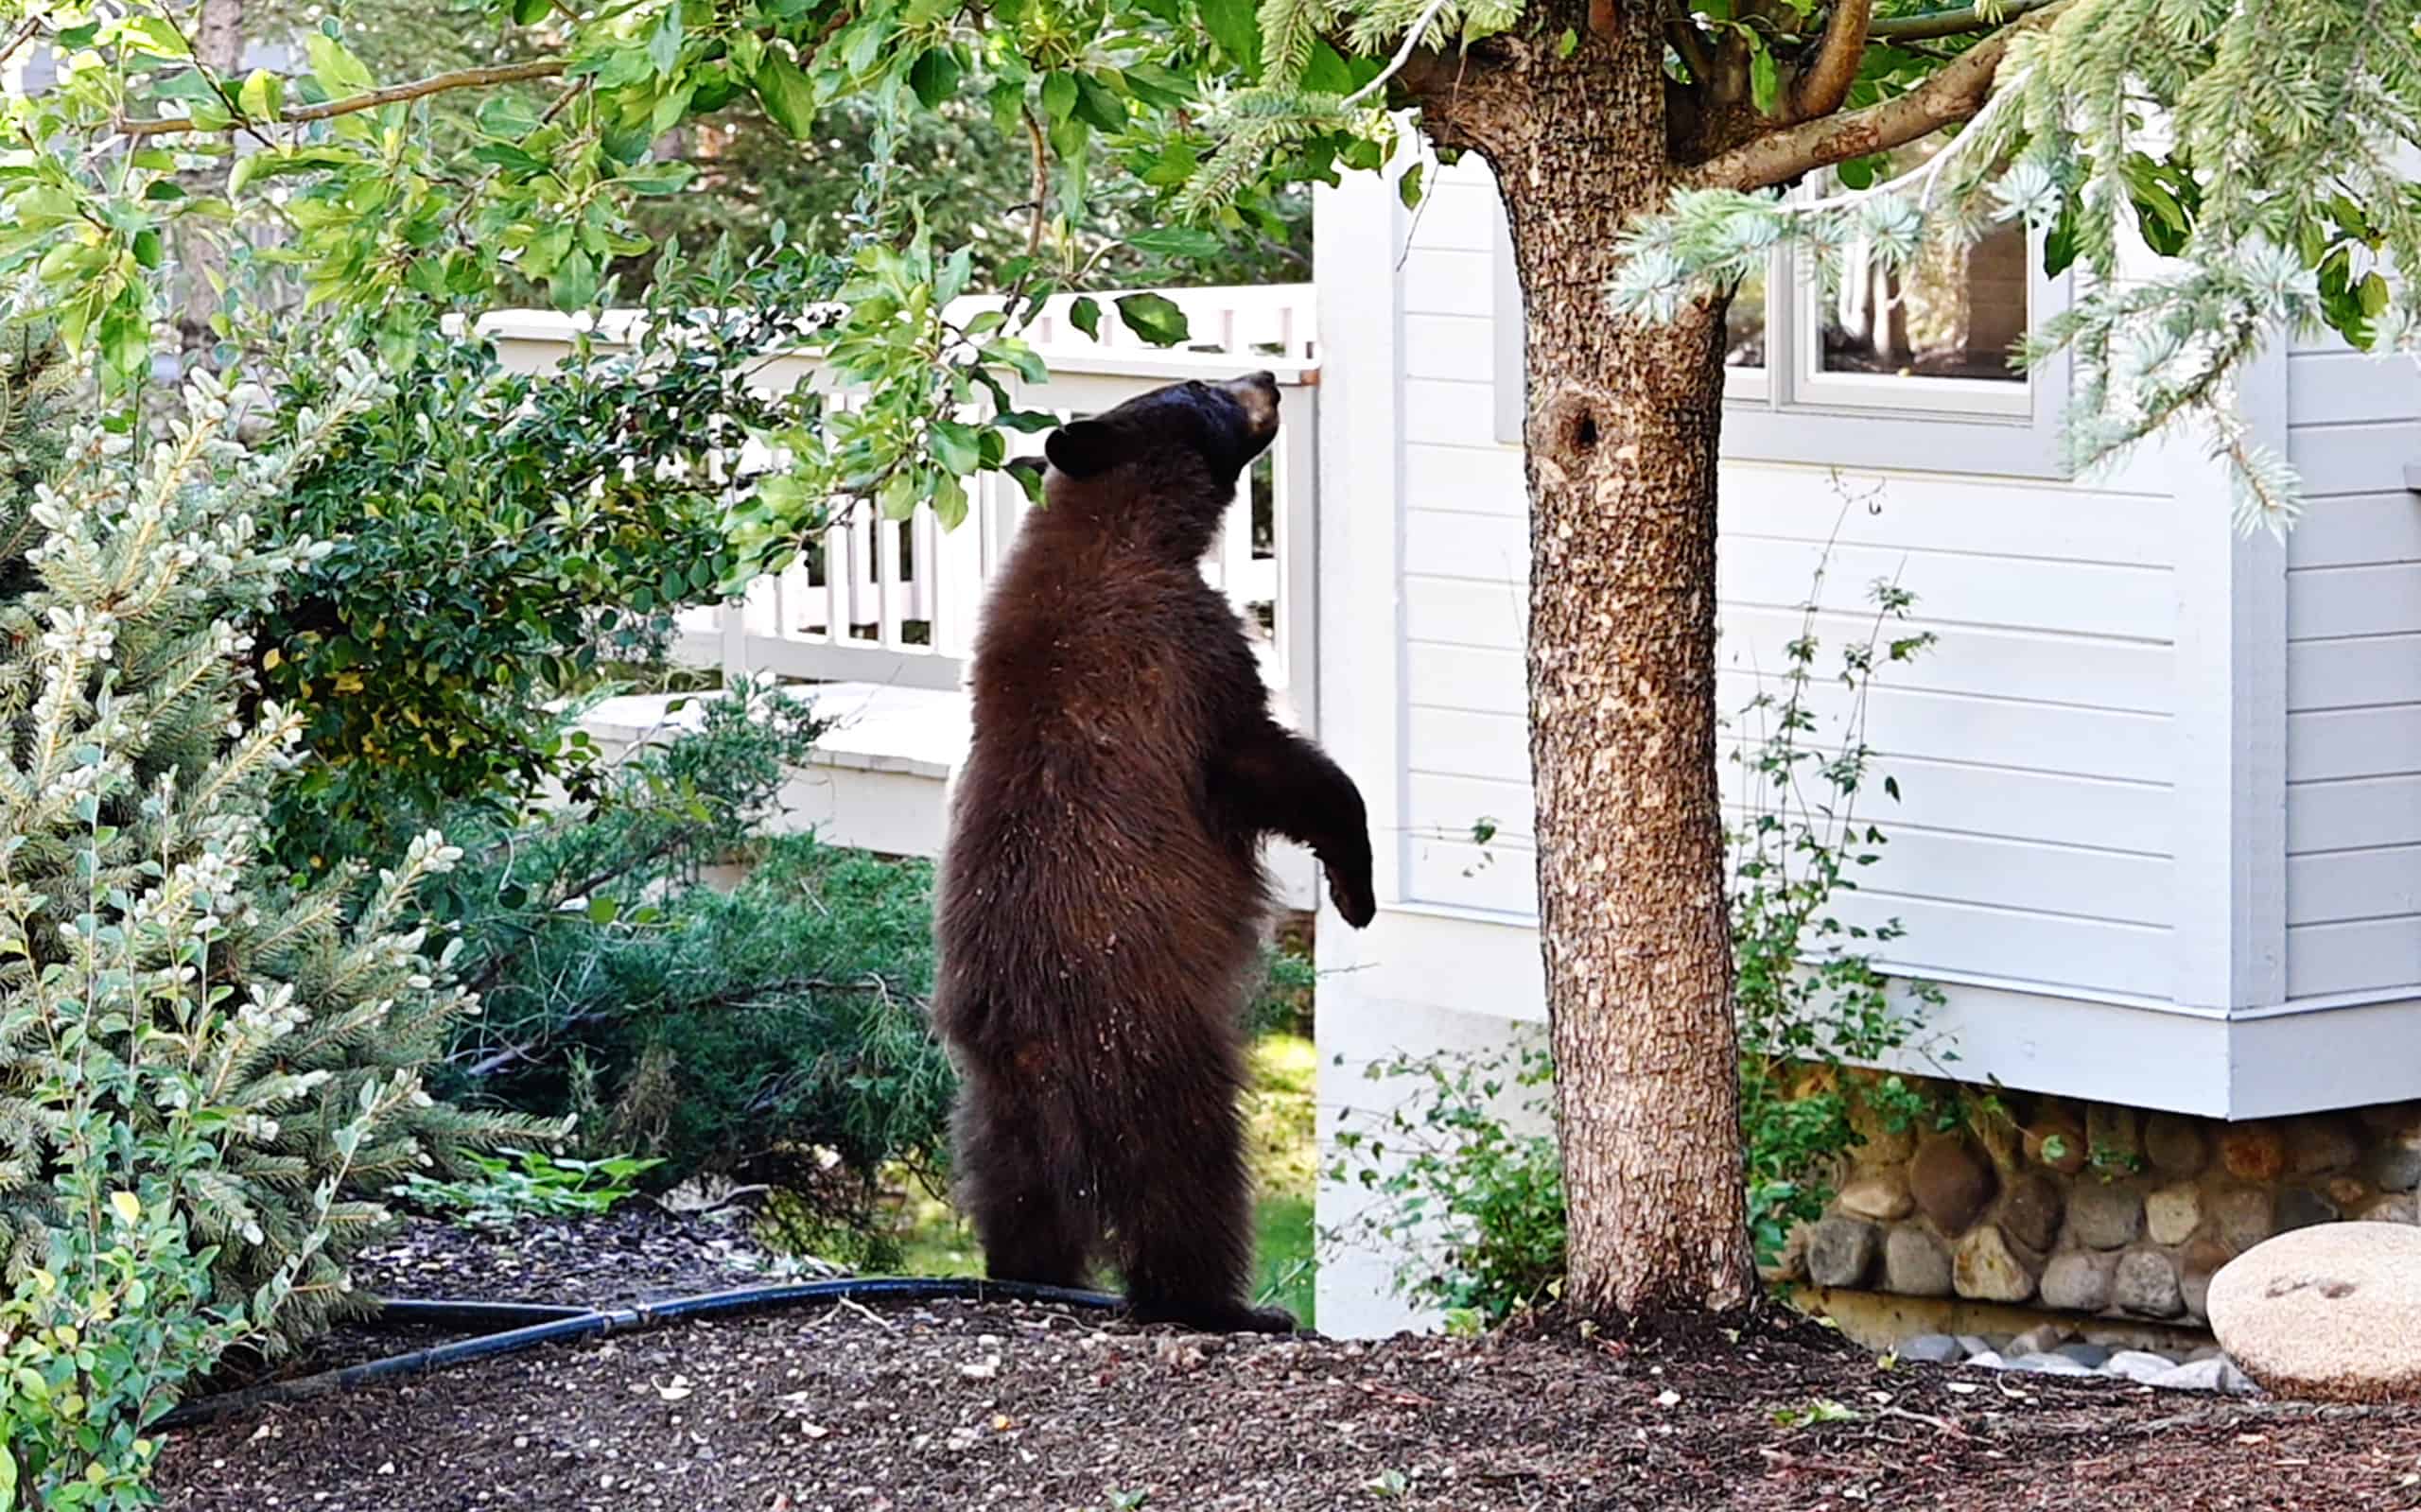 Black bears break into homes